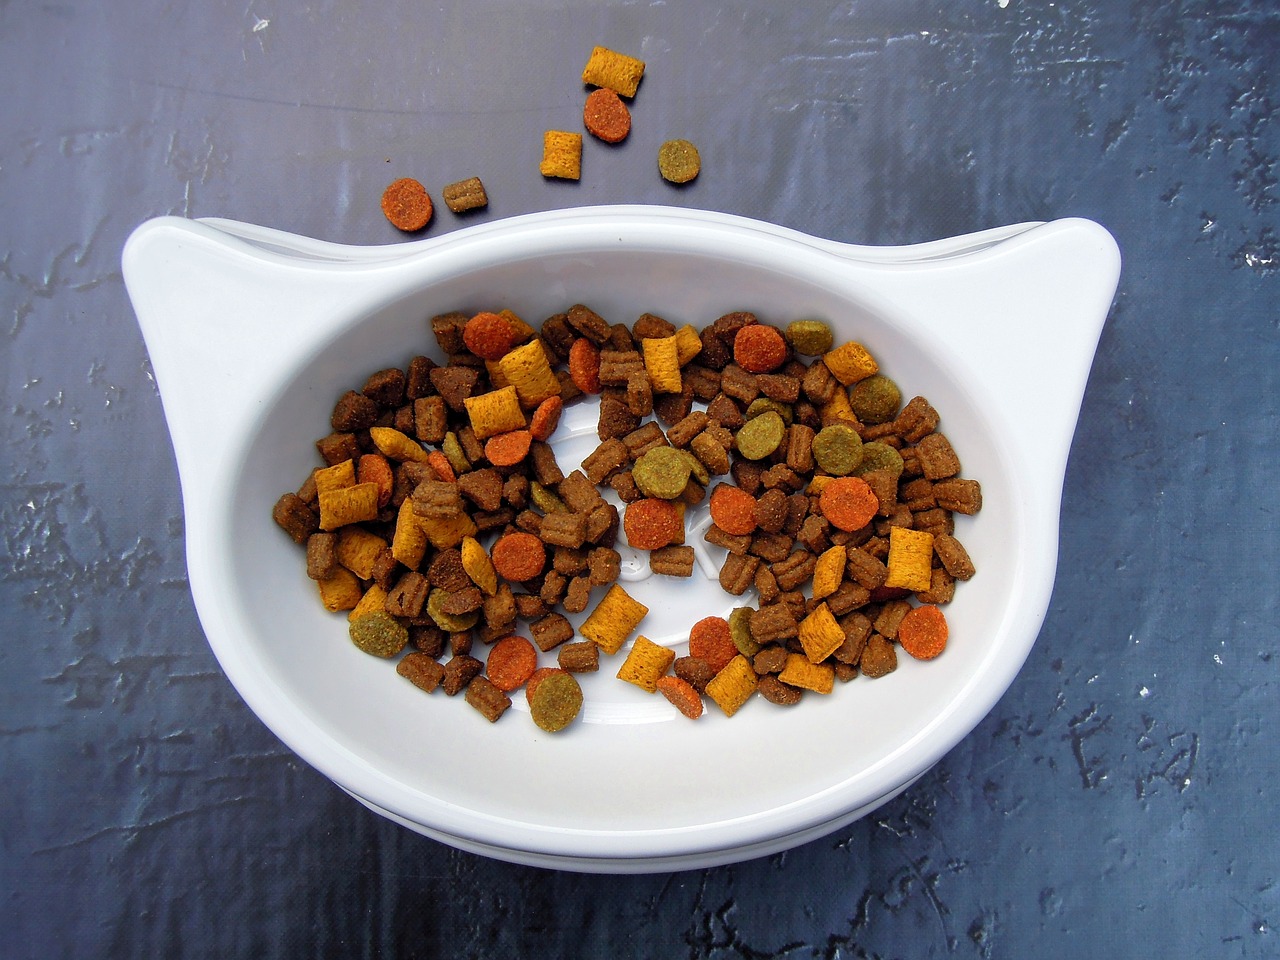 Cat,food,pet food,dry food,bowl - free image from needpix.com